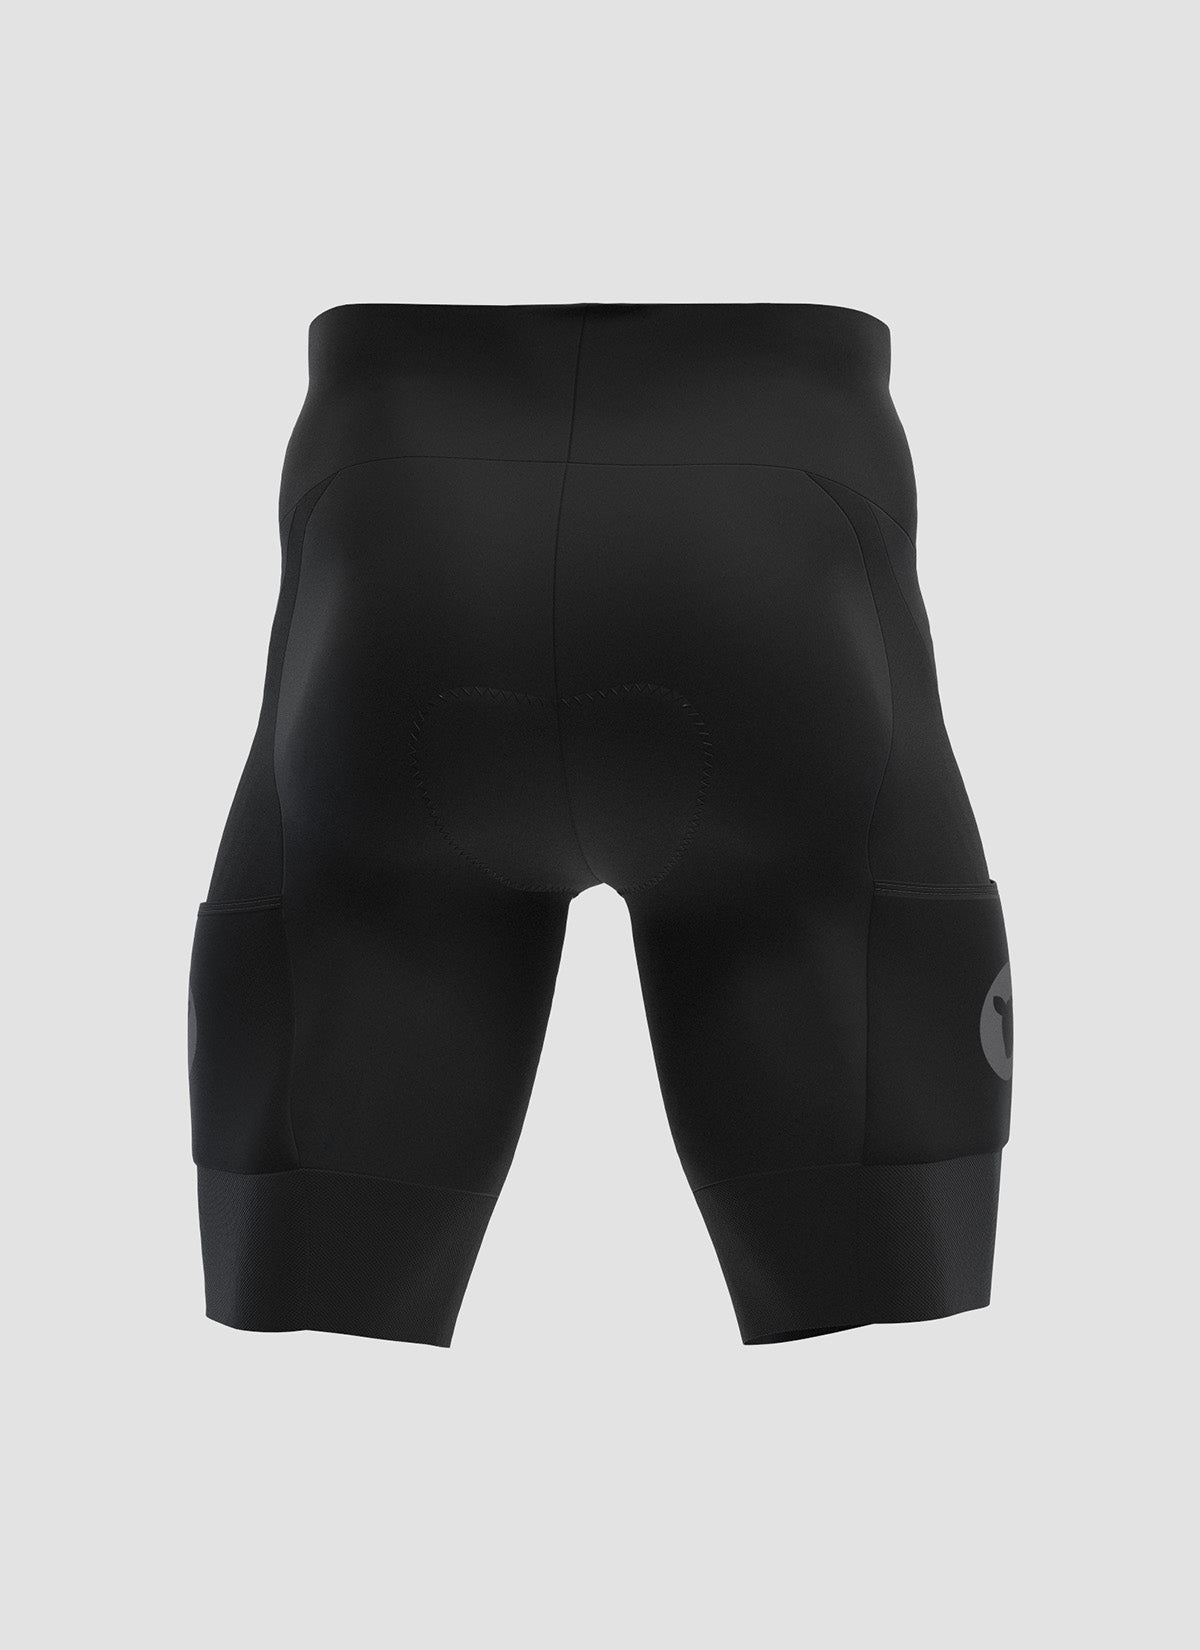 Men's Adventure Cargo Shorts - Black